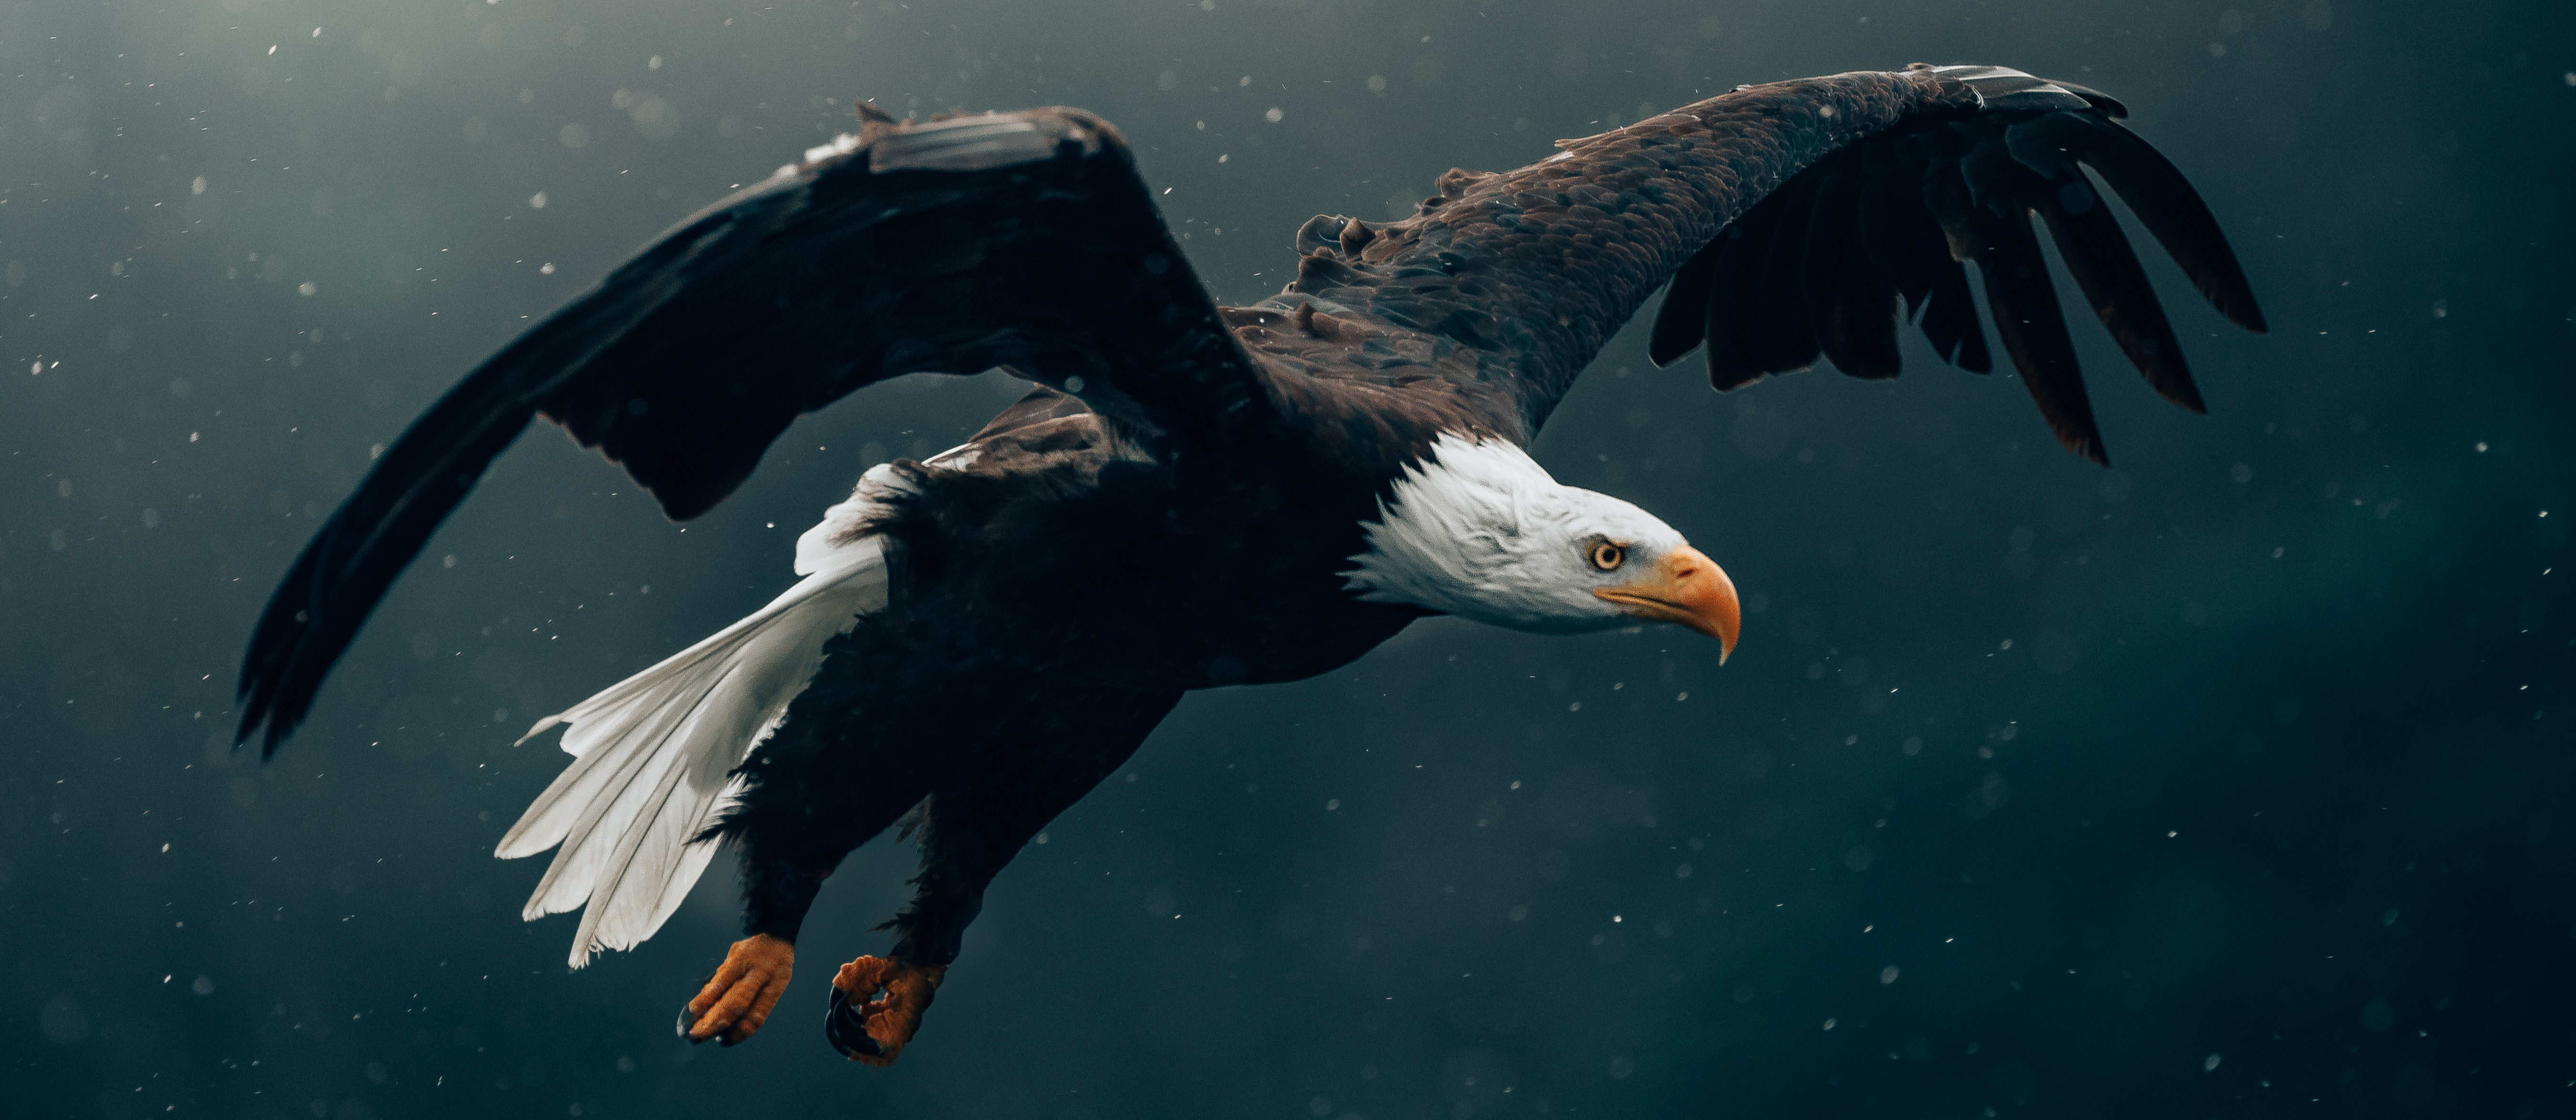 eagle art by philip pilz